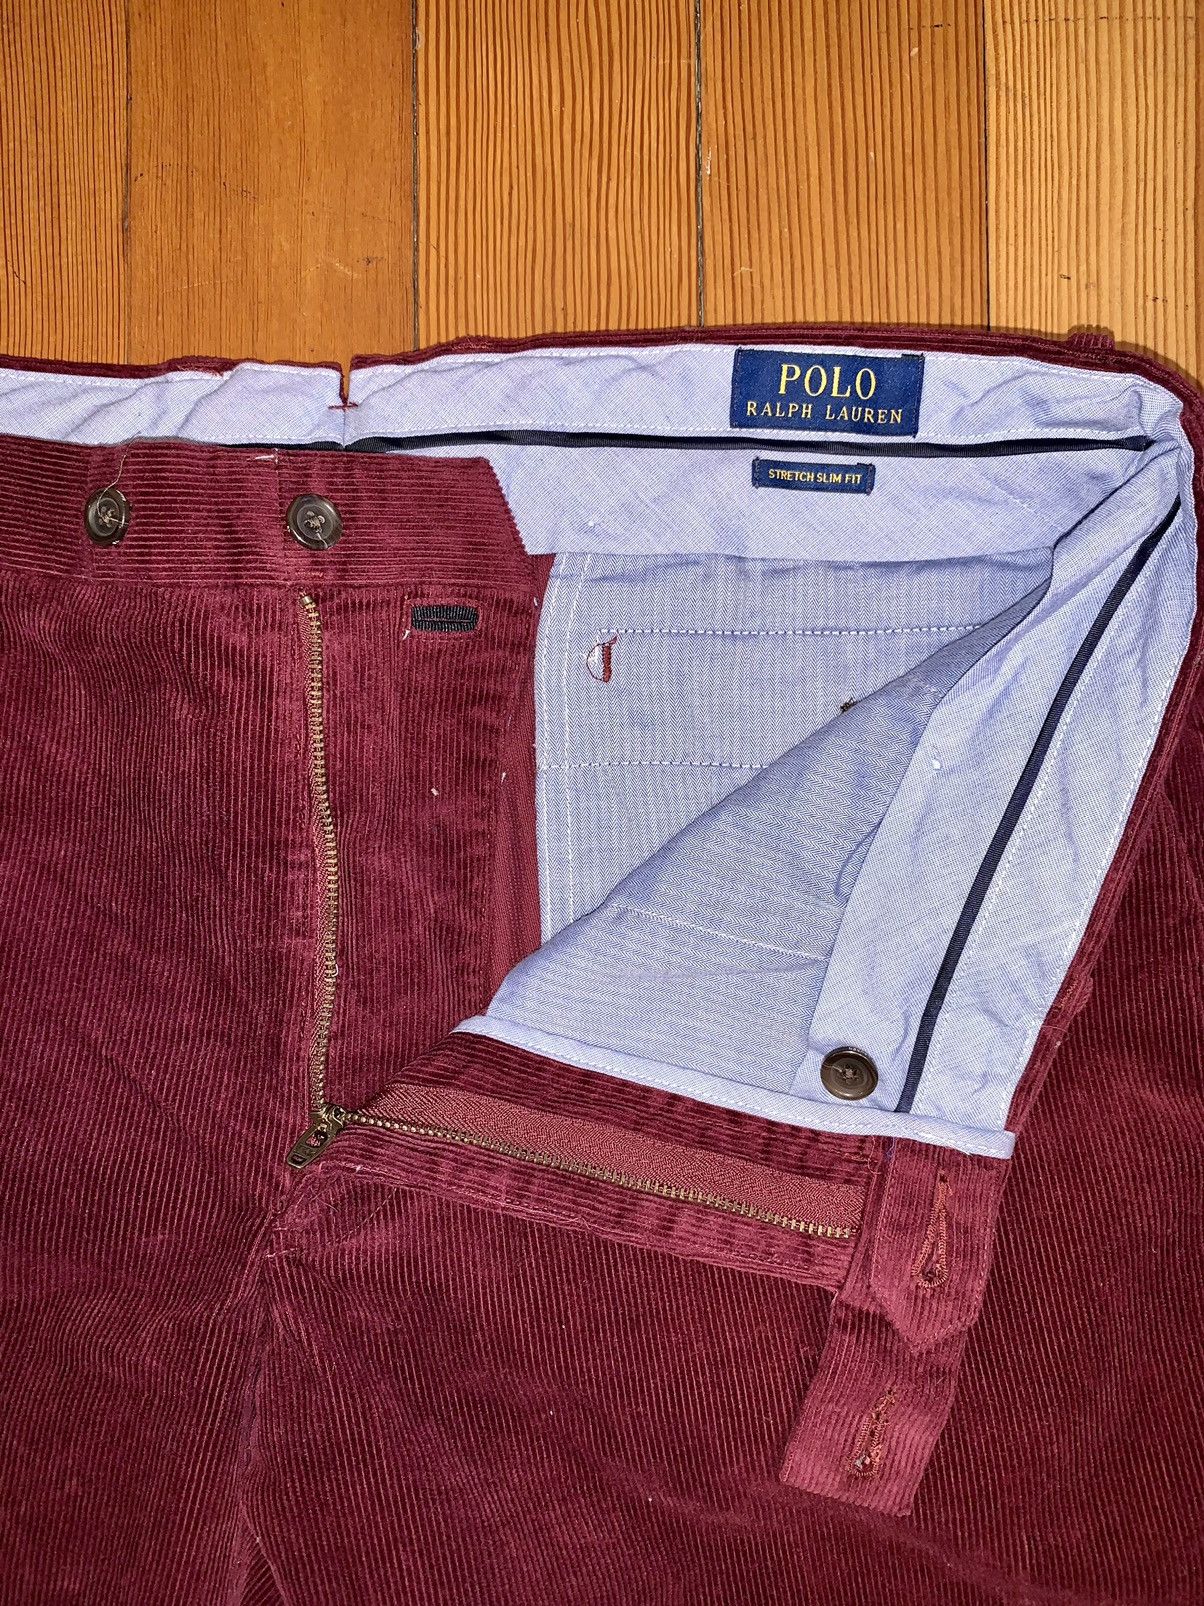 Ralph Lauren Red Ralph Lauren Corduroy Trousers Size US 36 / EU 52 - 3 Thumbnail